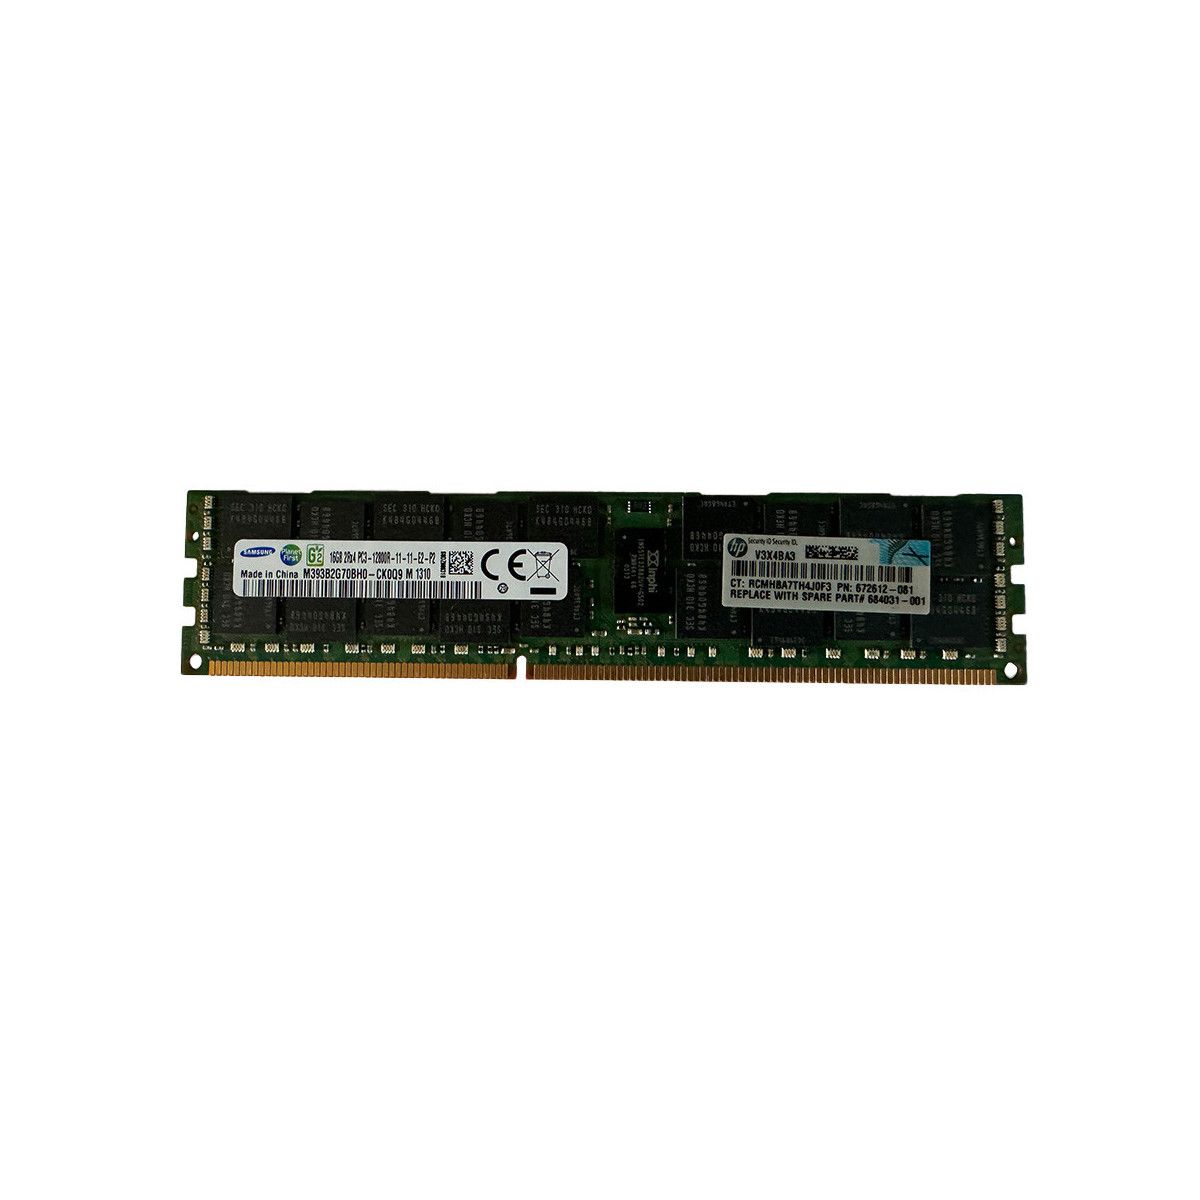 371-4658-MS -NO- Memstar 1x 16GB DDR3-1333 RDIMM PC3L-10600R